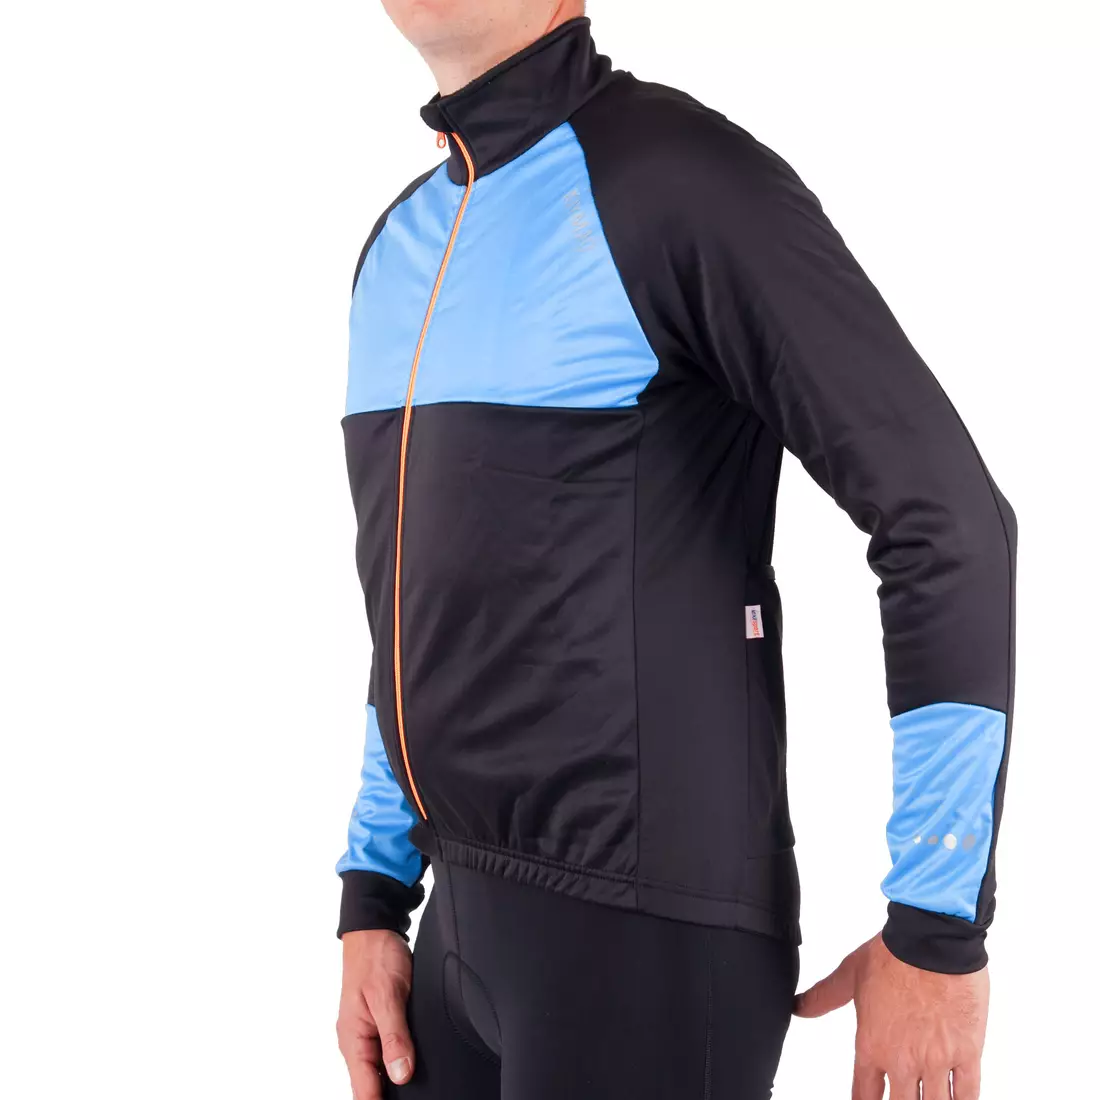 KAYMAQ JWS-002 Softshell men's winter bike jacket, blue-black